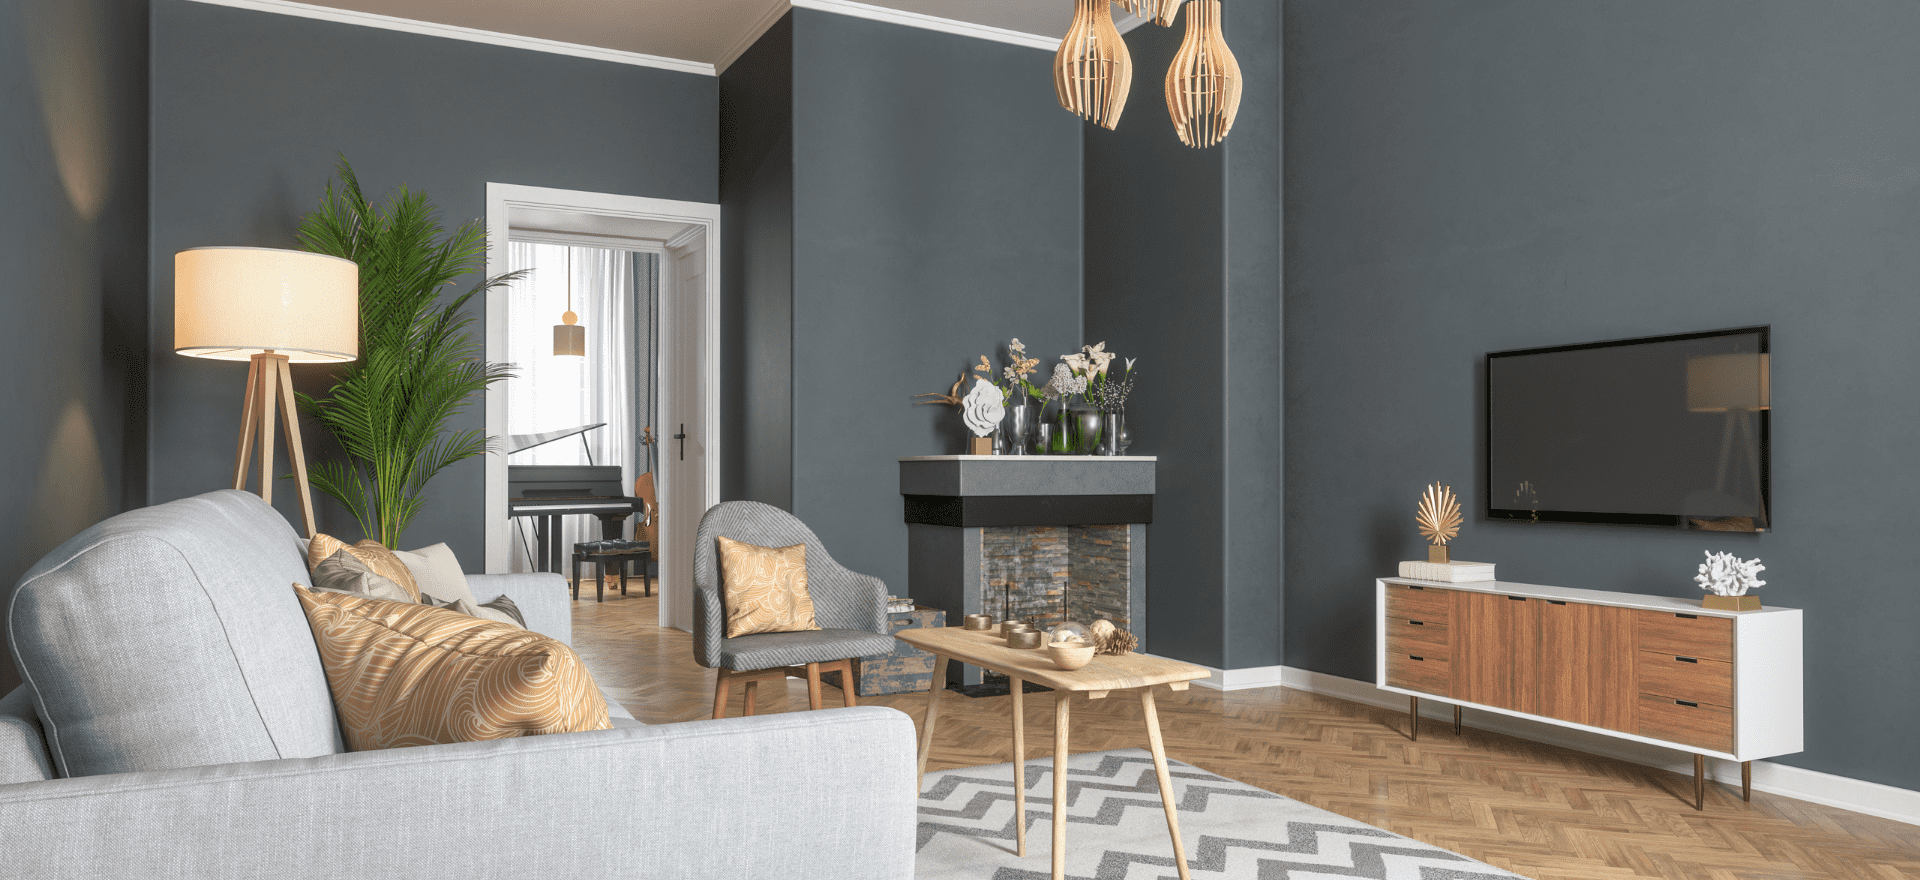 livingroom with suistanability